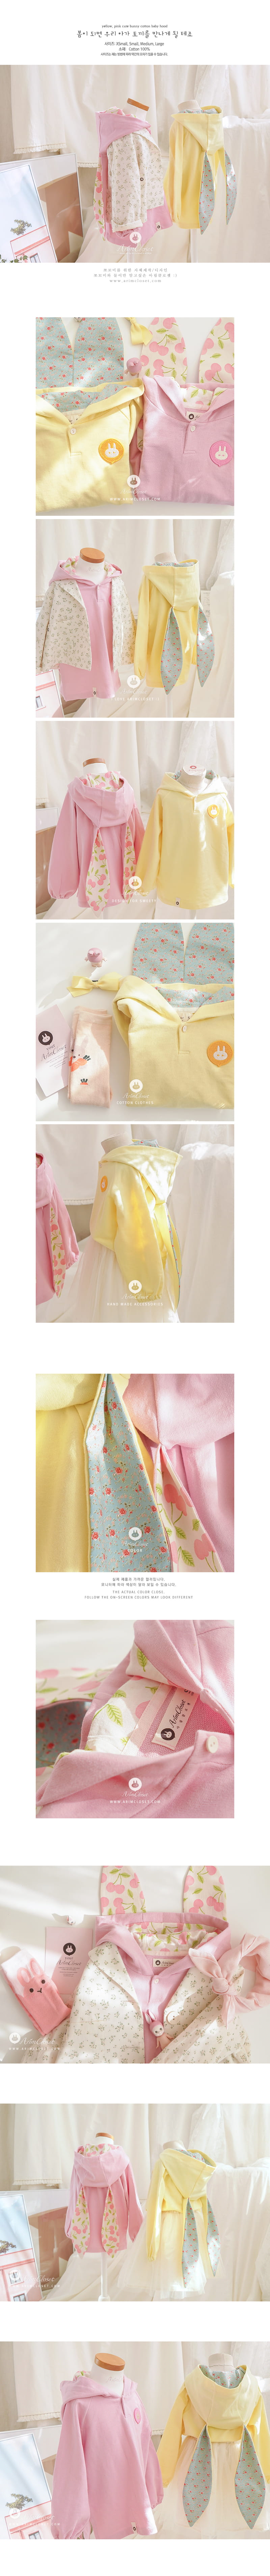 Arim Closet - Korean Baby Fashion - #babyboutique - Bunny Hoody - 2